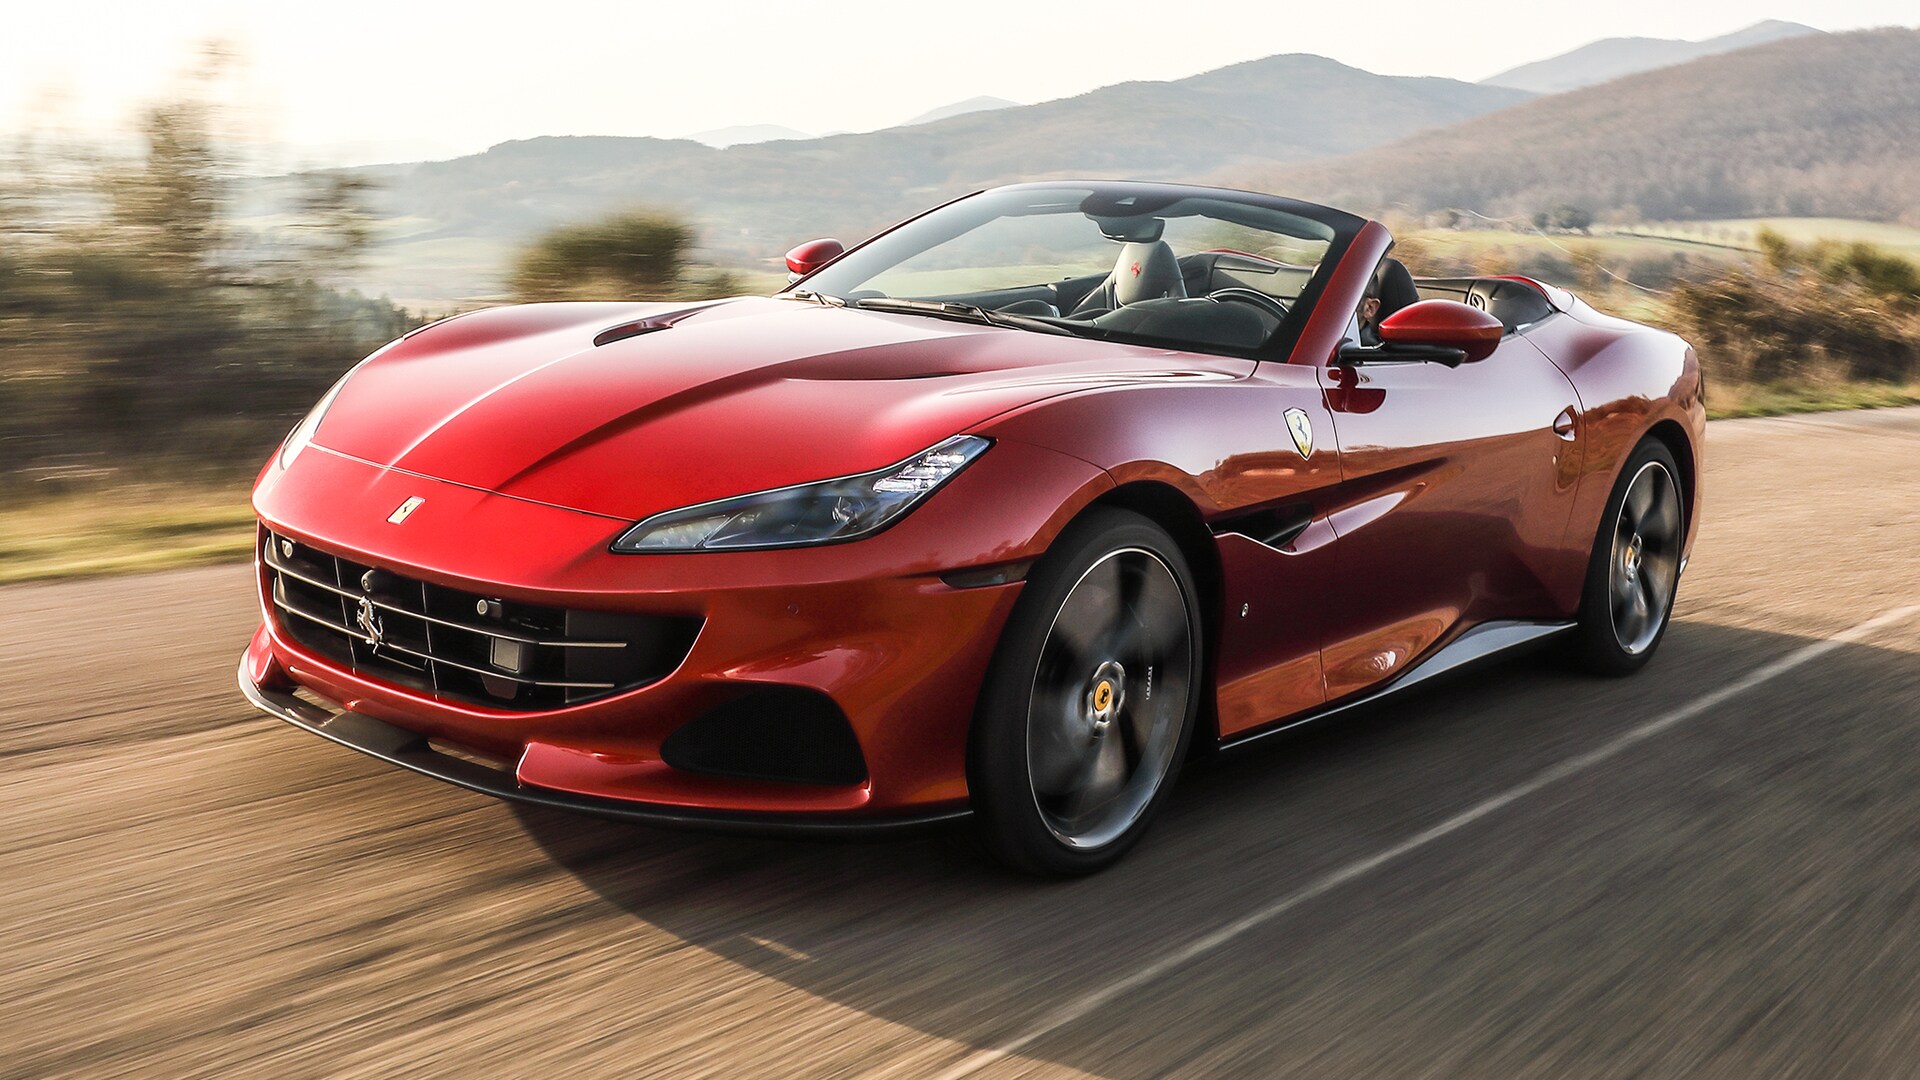 2023 Ferrari Portofino Prices, Reviews, and Photos - MotorTrend